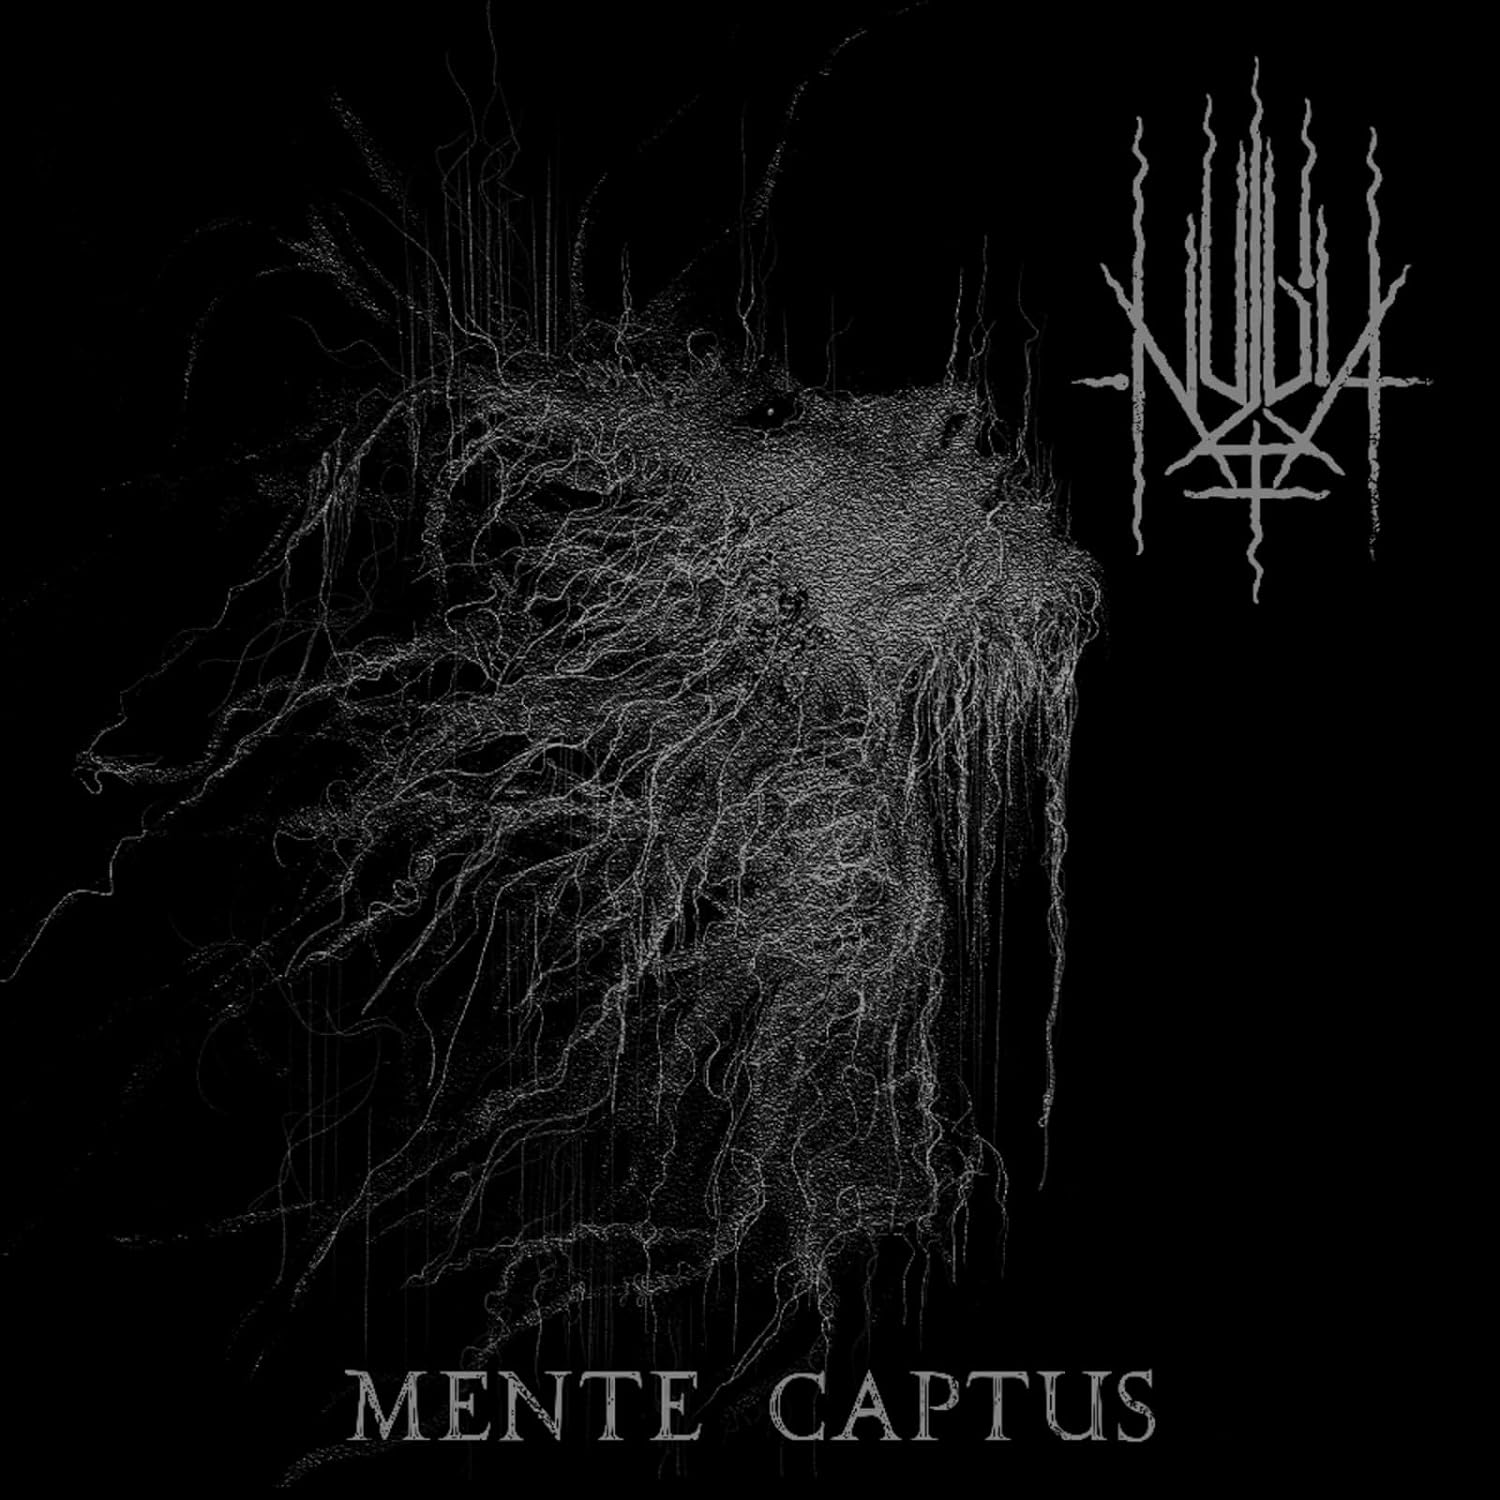 Nulla+ "Mente Captus" CD